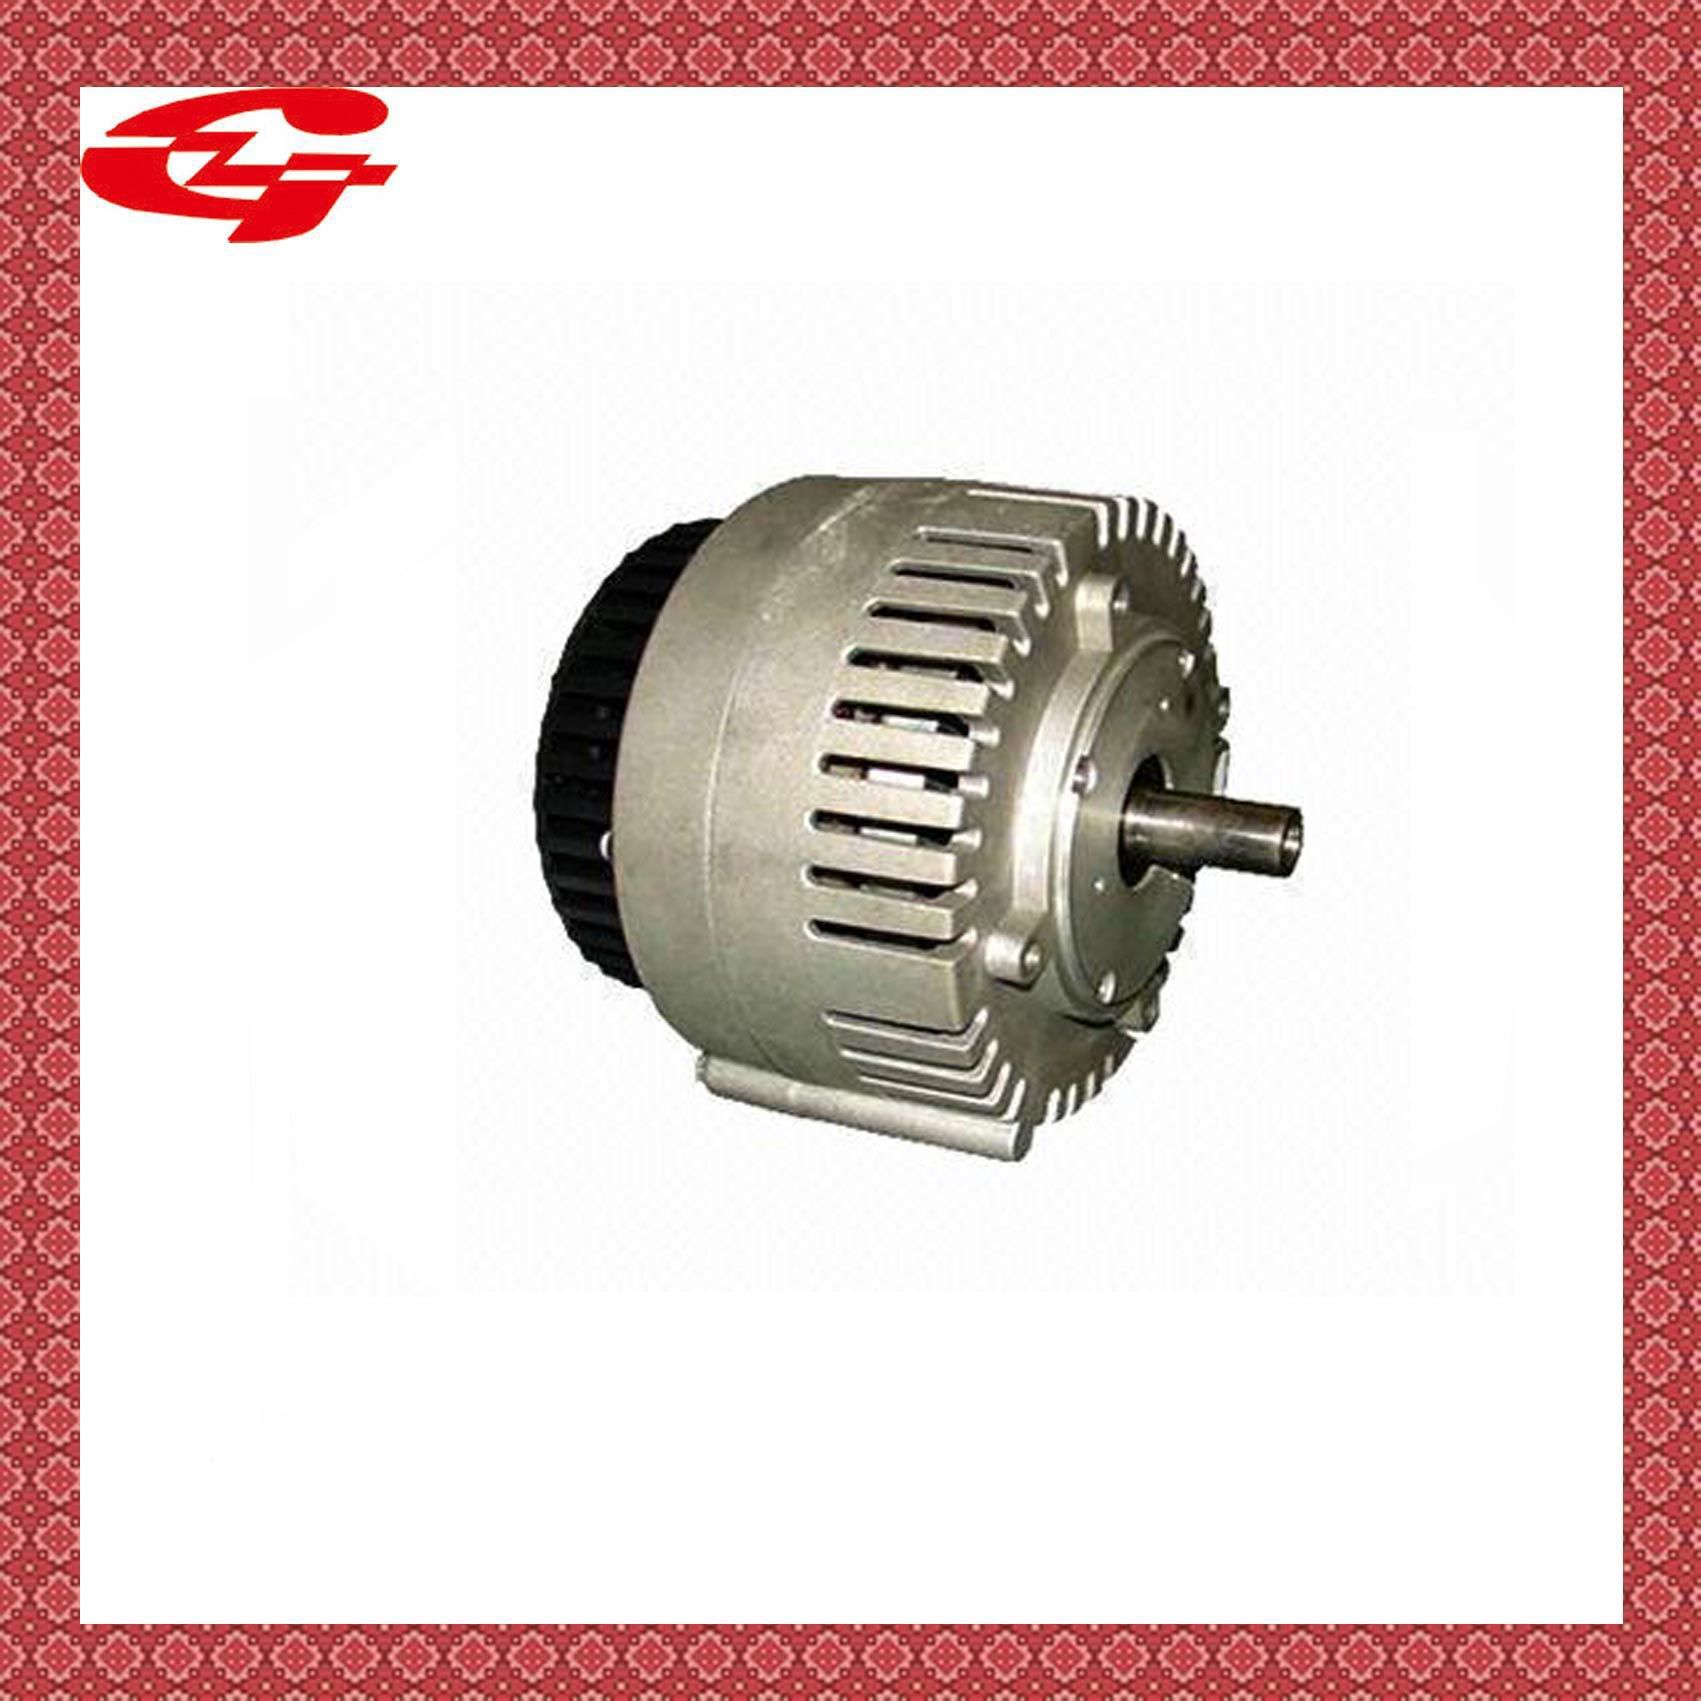 Brushless DC Electric Motor (ZG-077322)